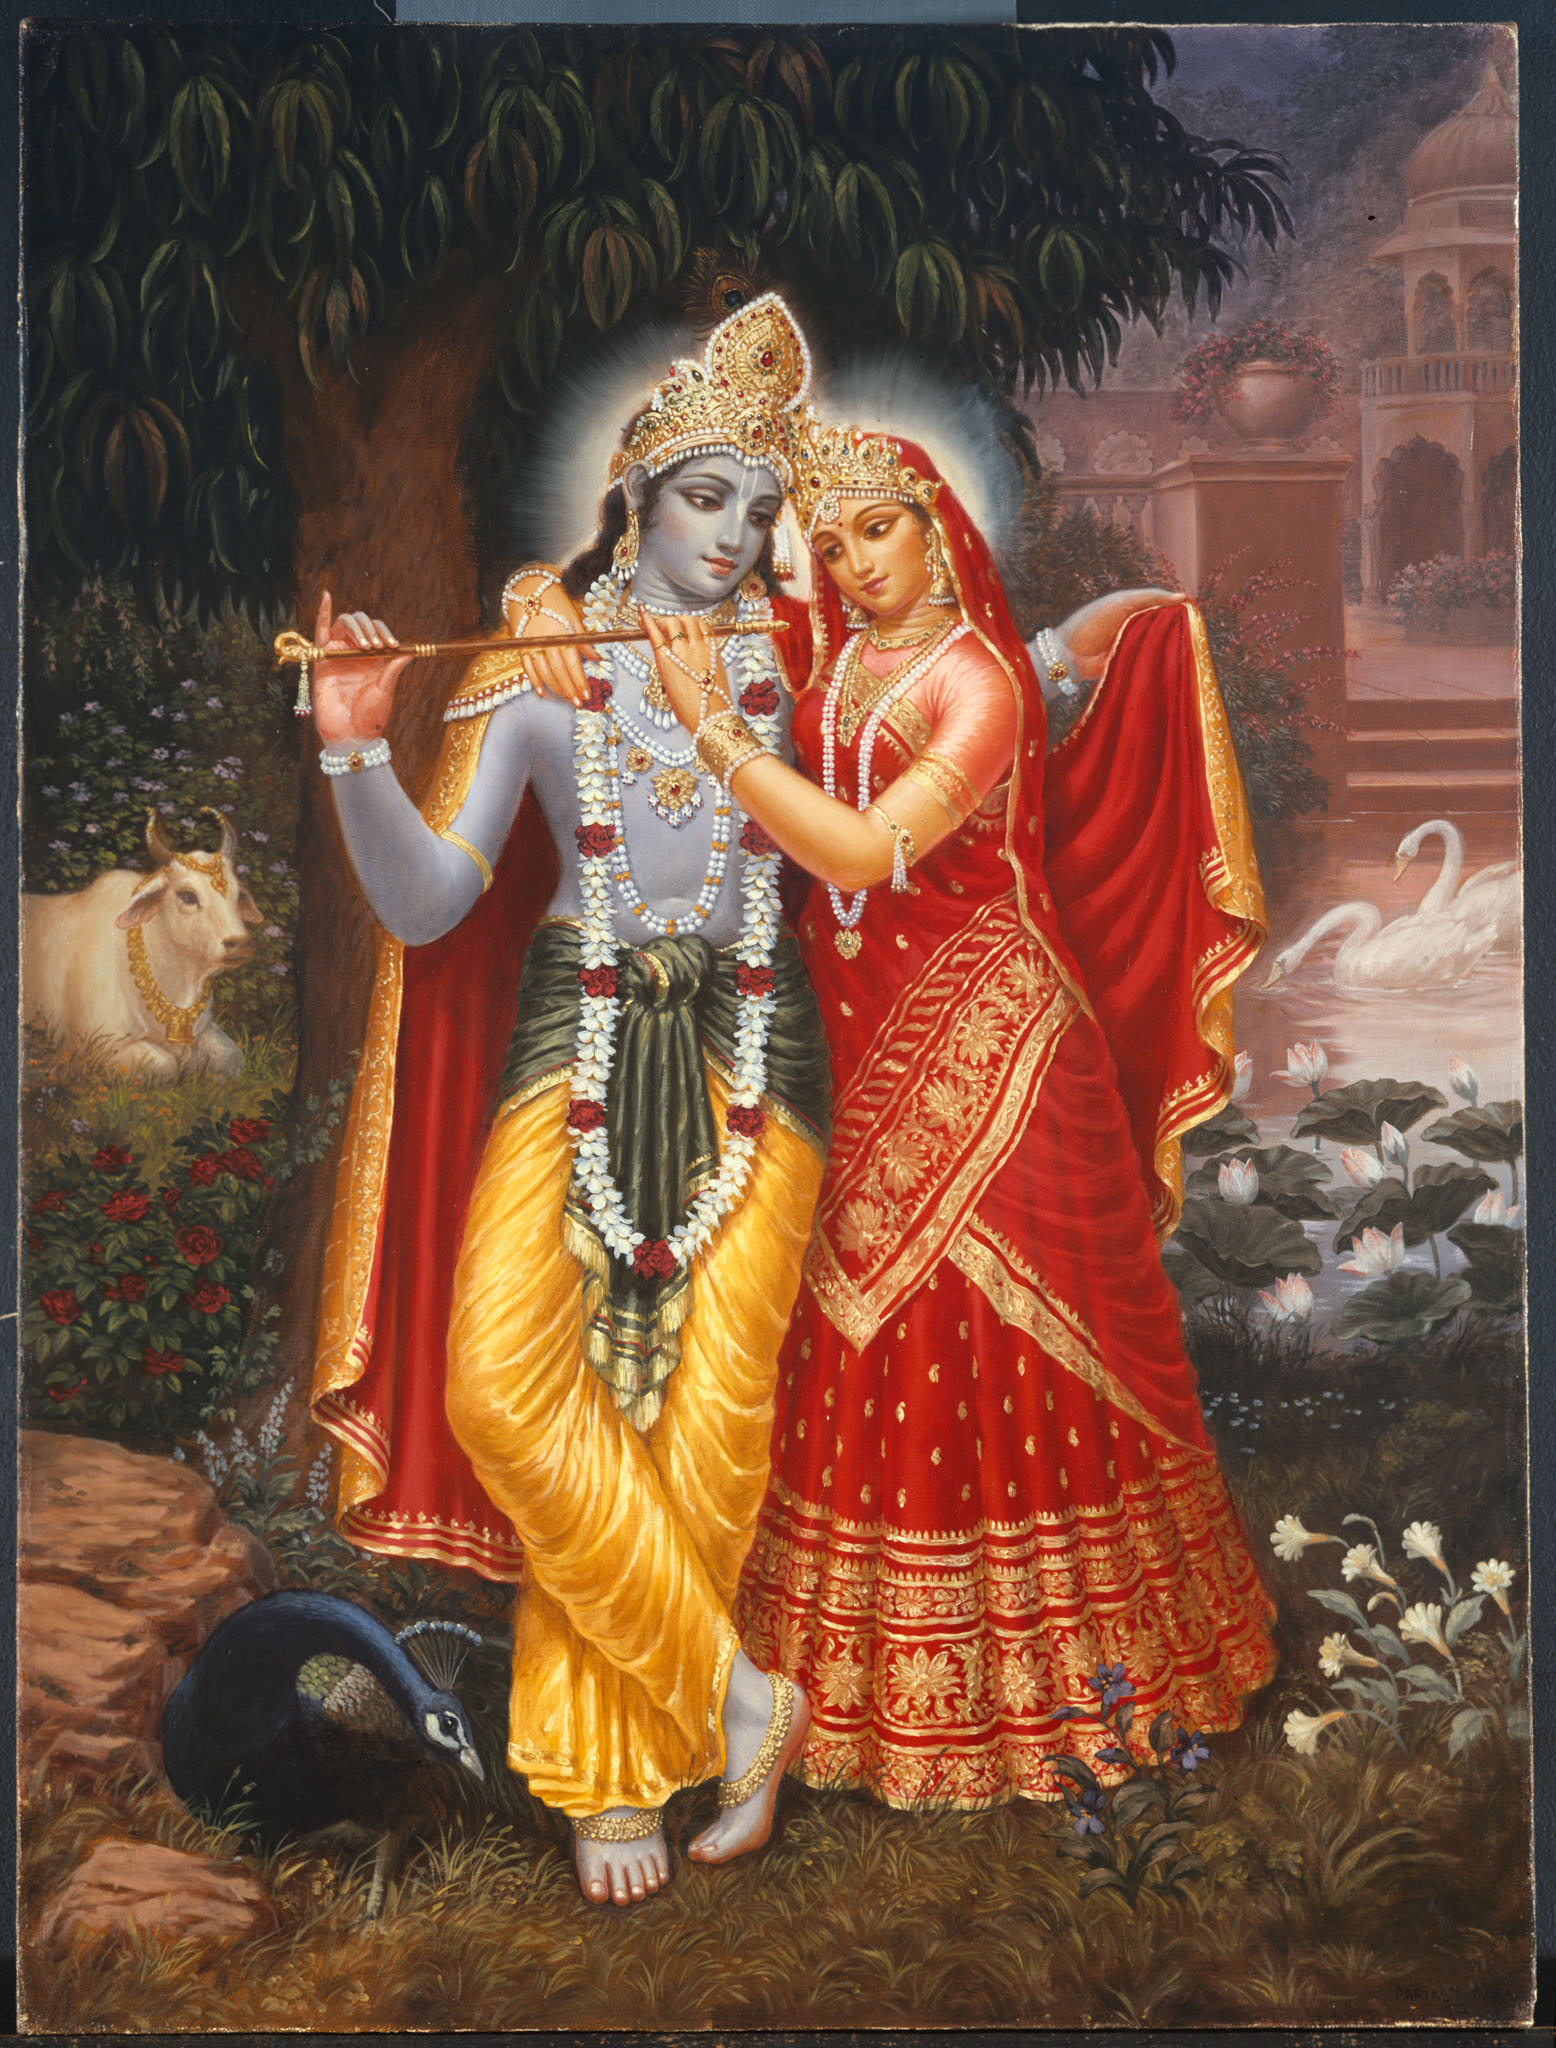 Krishna And Radha Rani - 1556x2048 Wallpaper - teahub.io